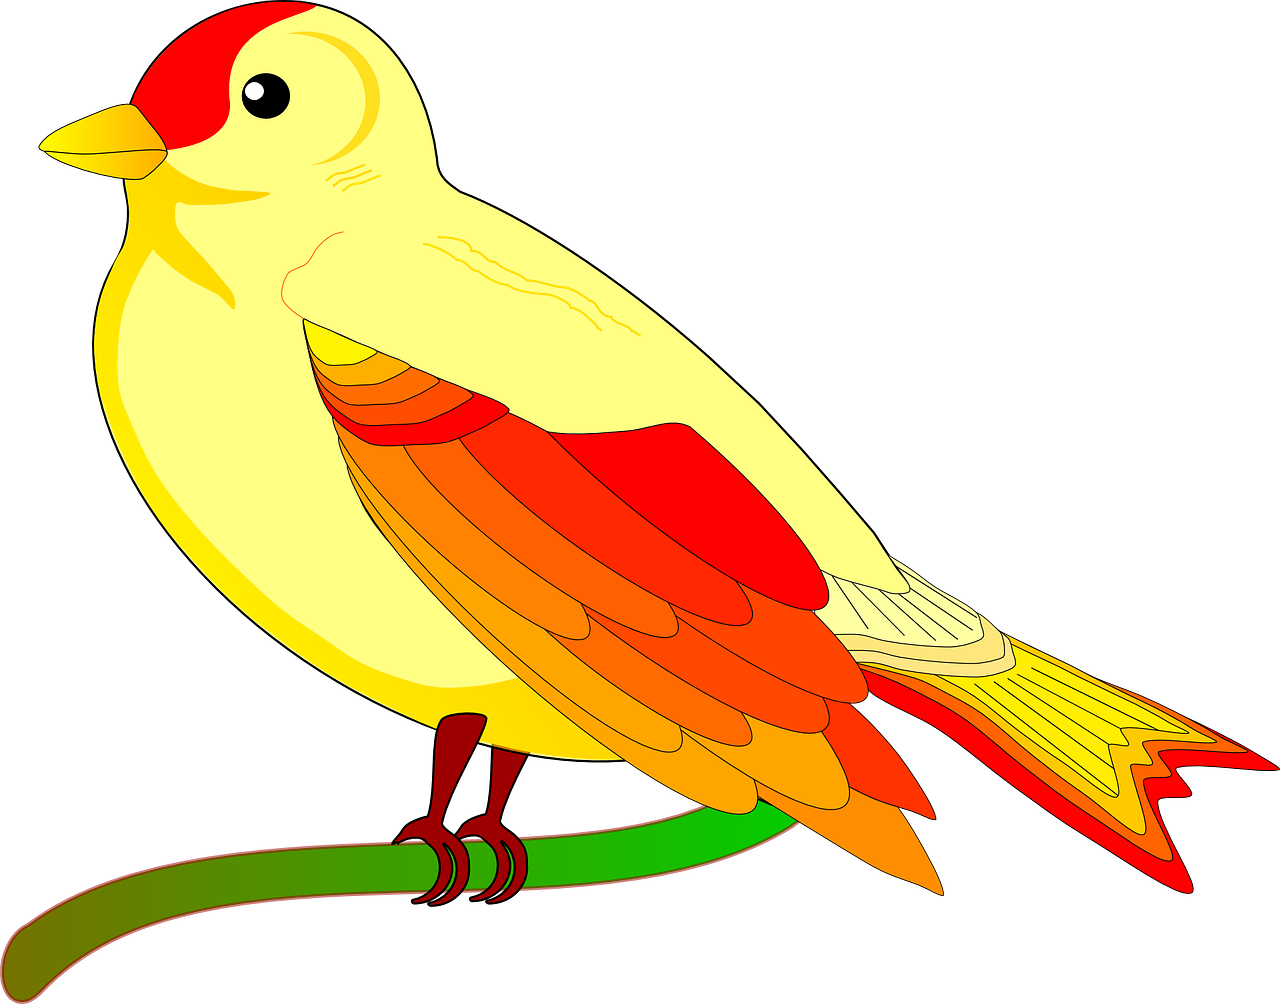 parrot bird exotic free photo